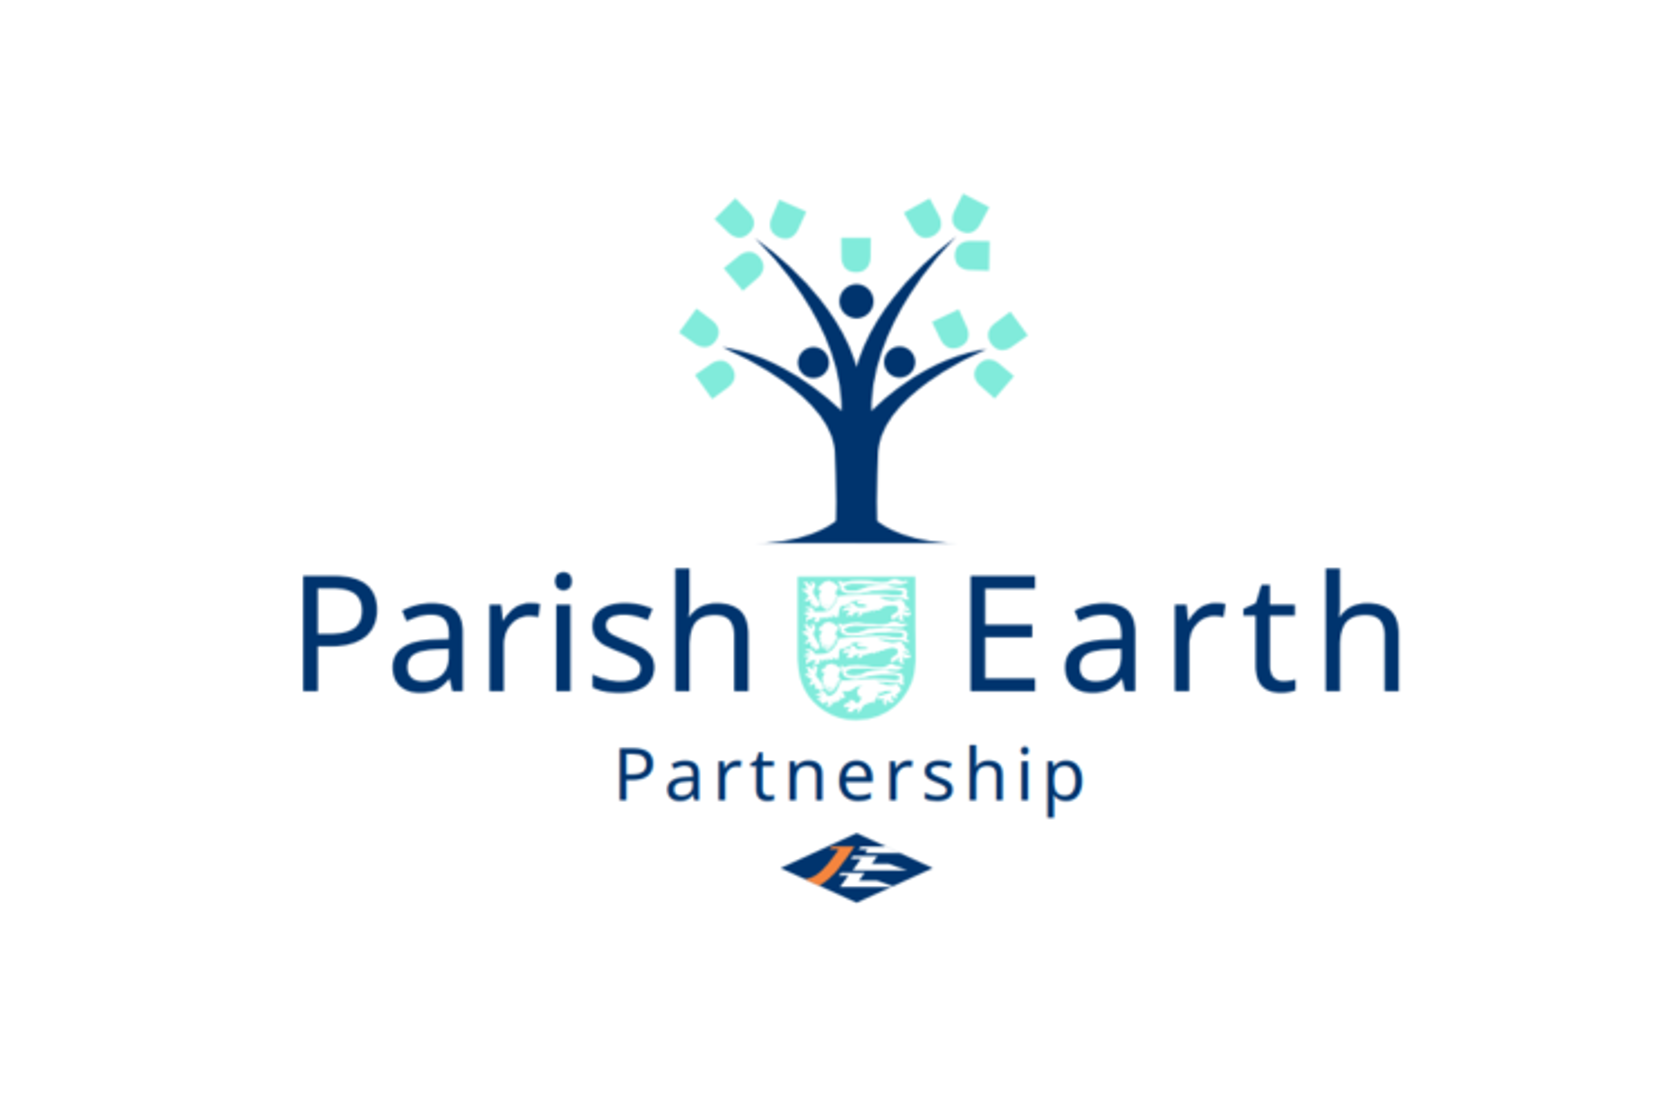 Parish Earth Partnership (1)